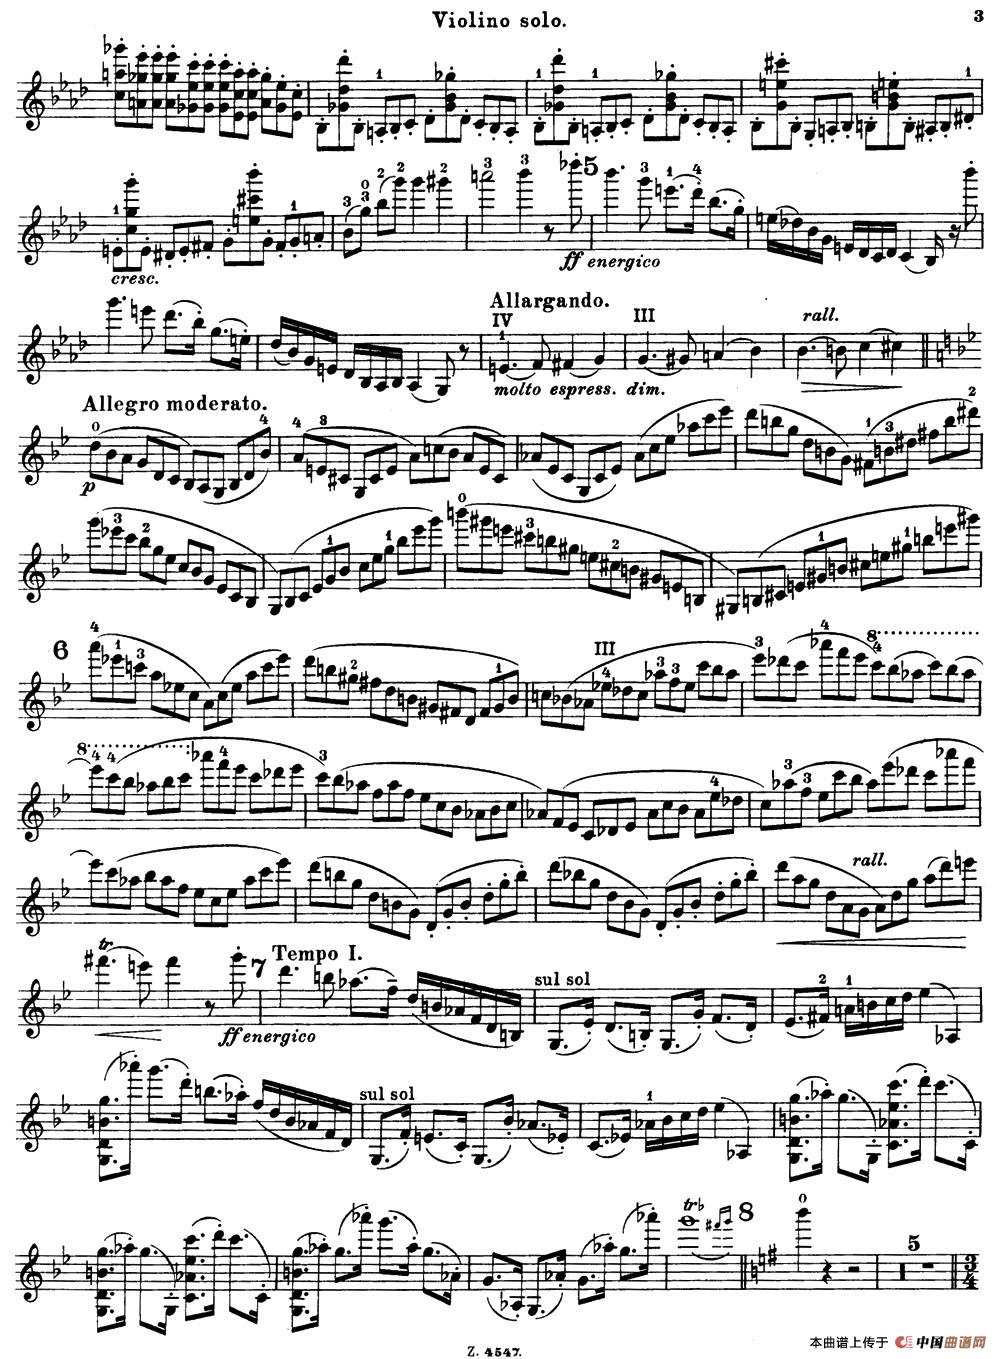 第3号小提琴协奏曲 Op.99（violin concerto no.3）